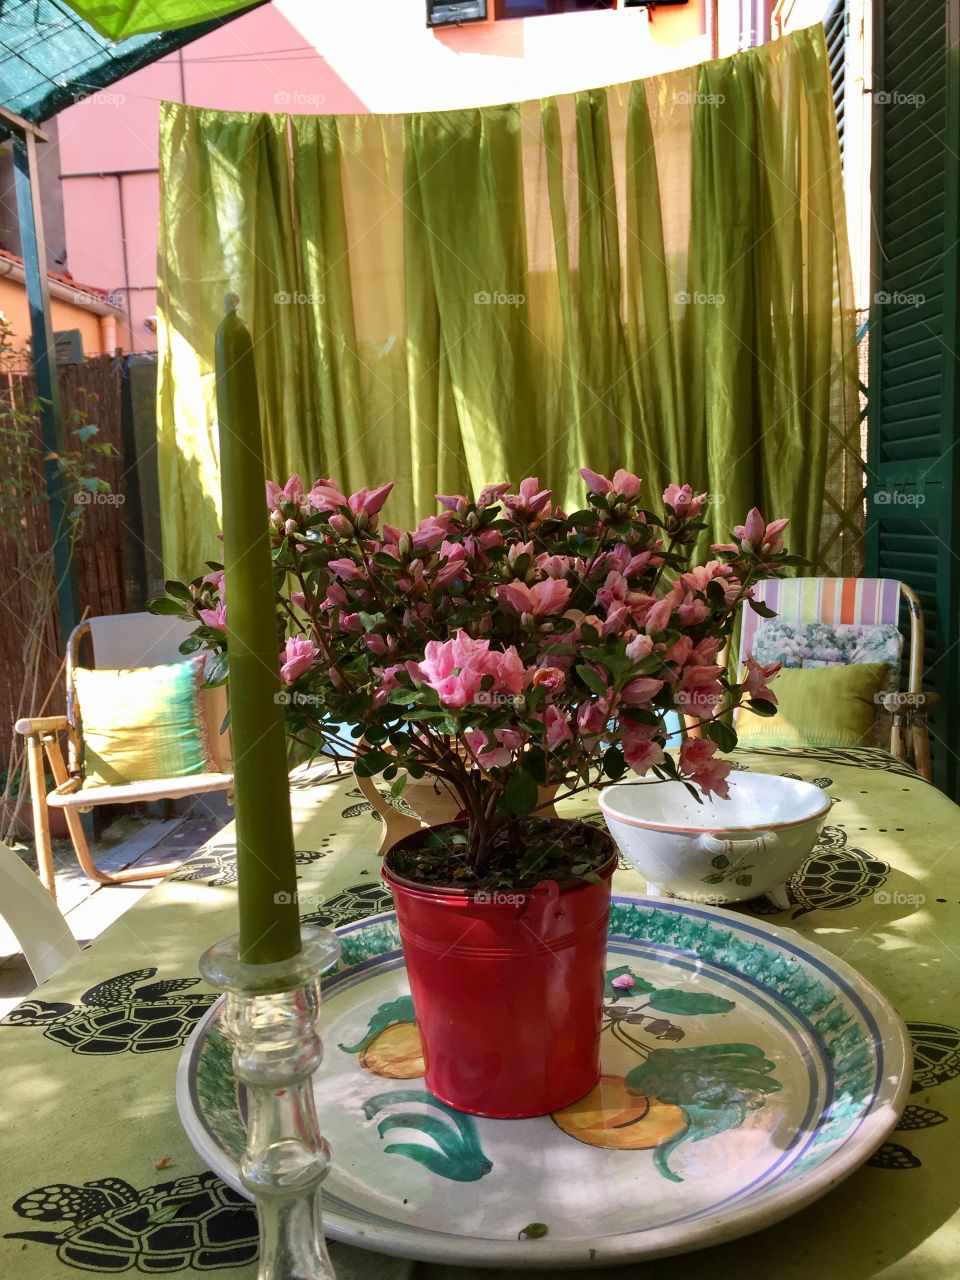 Breakfast with flowers